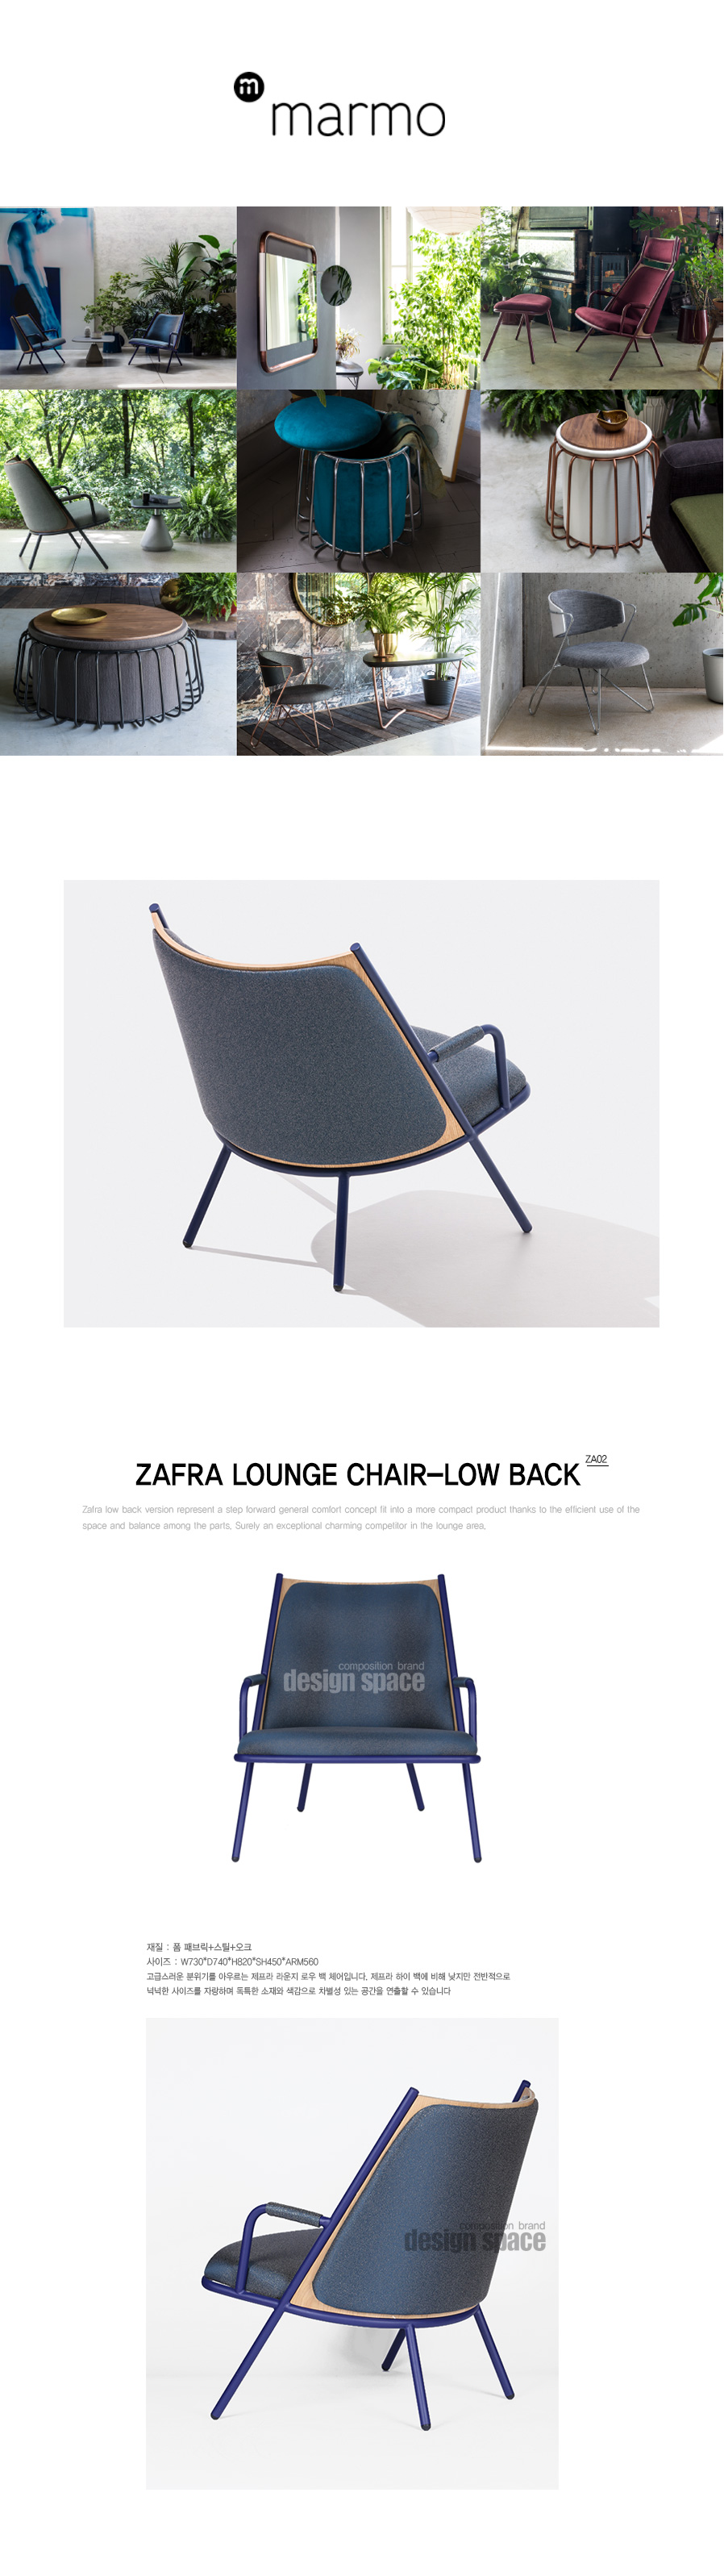 zafra-lounge-chair_low-back_01.jpg